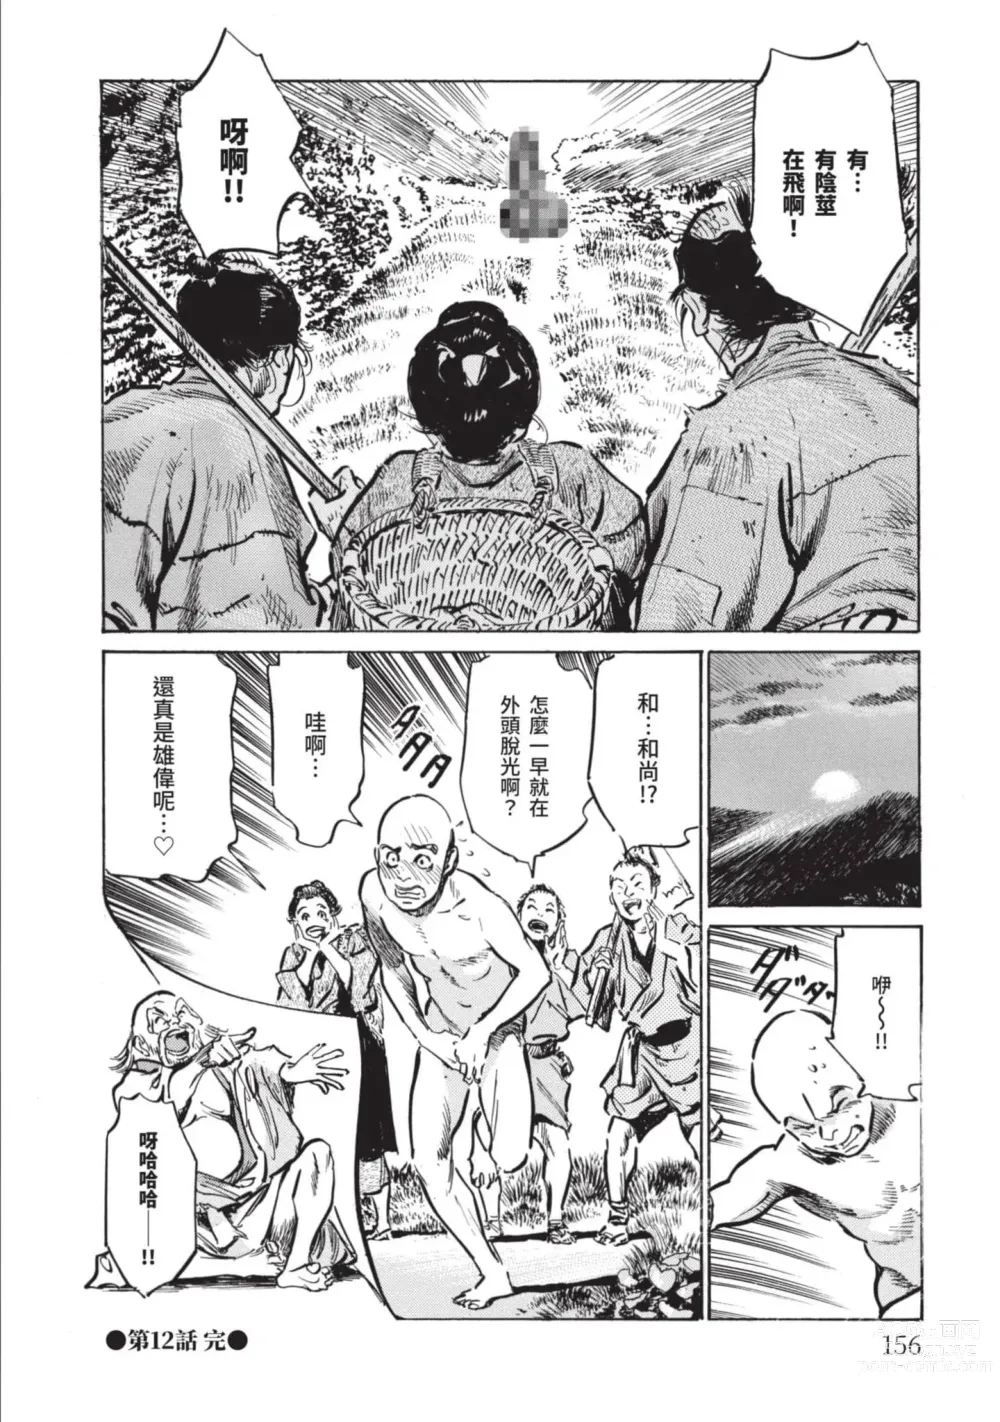 Page 155 of manga Inshuu Hiroku Midare Mandara 2